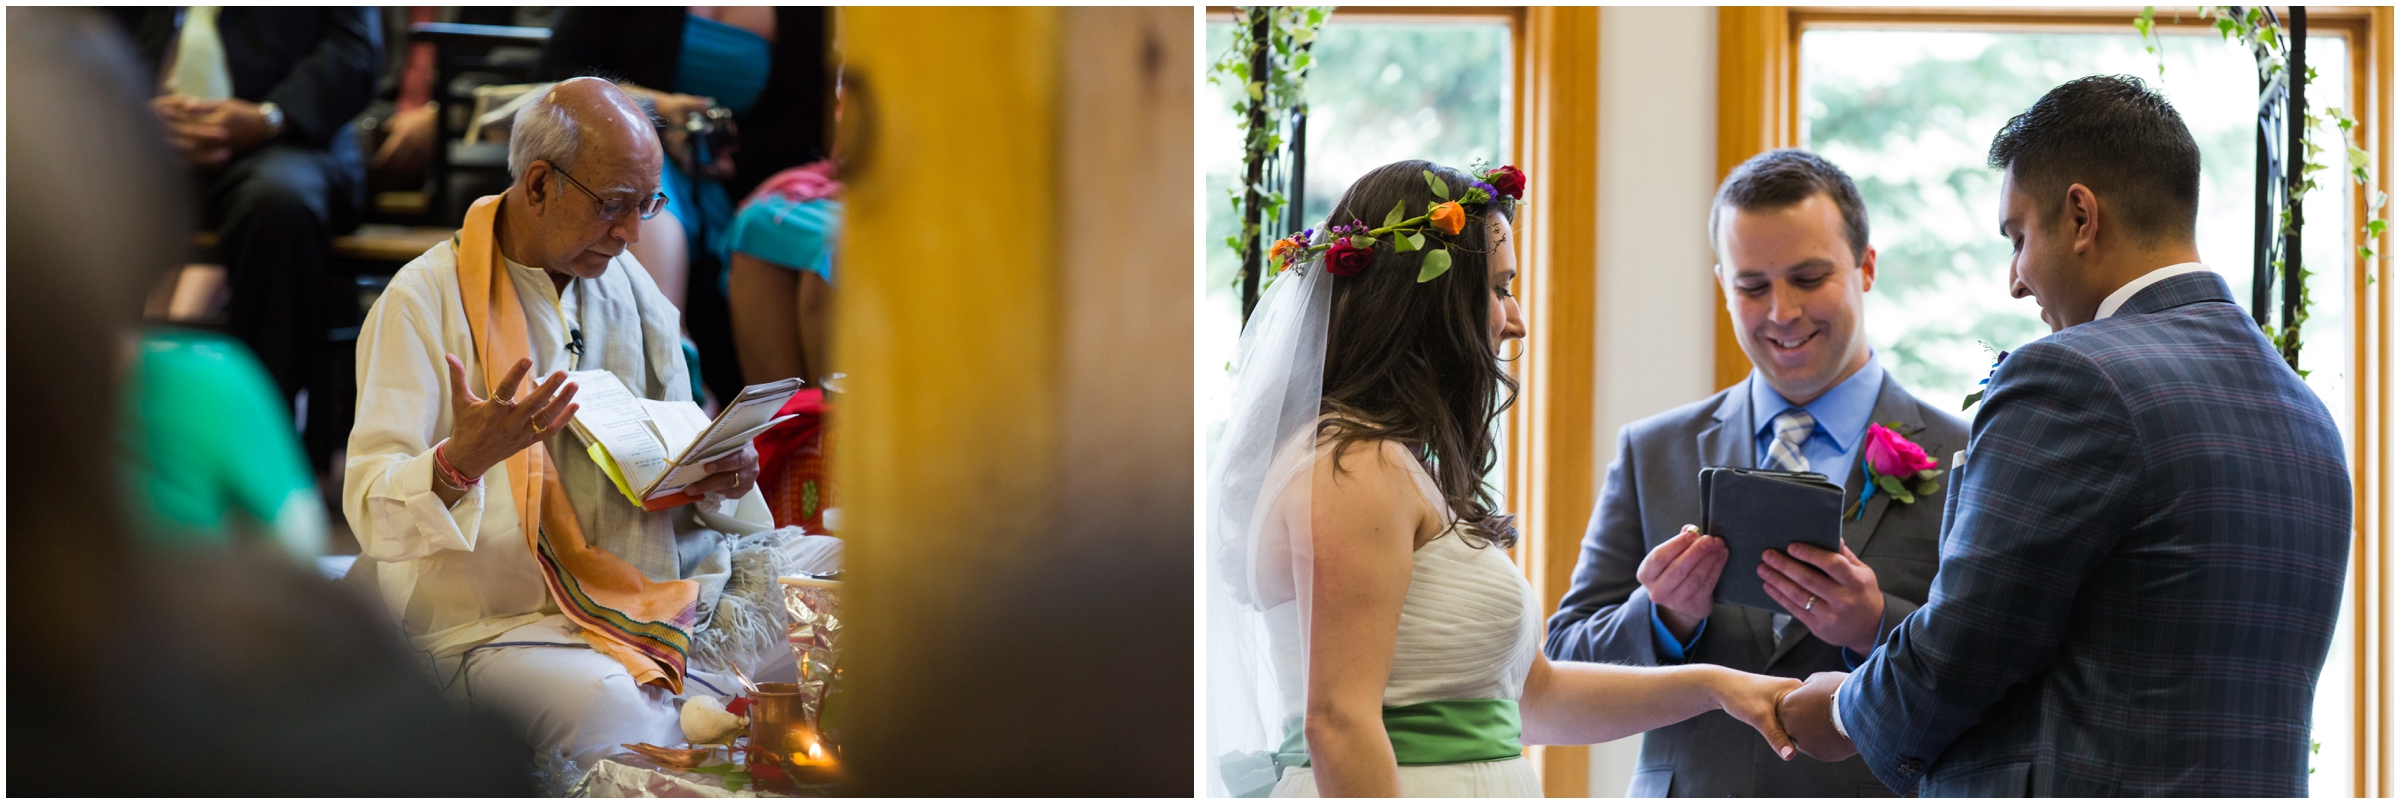 Hindu Christian Wedding Ceremony (Selena Phillips-Boyle)_0012.jpg